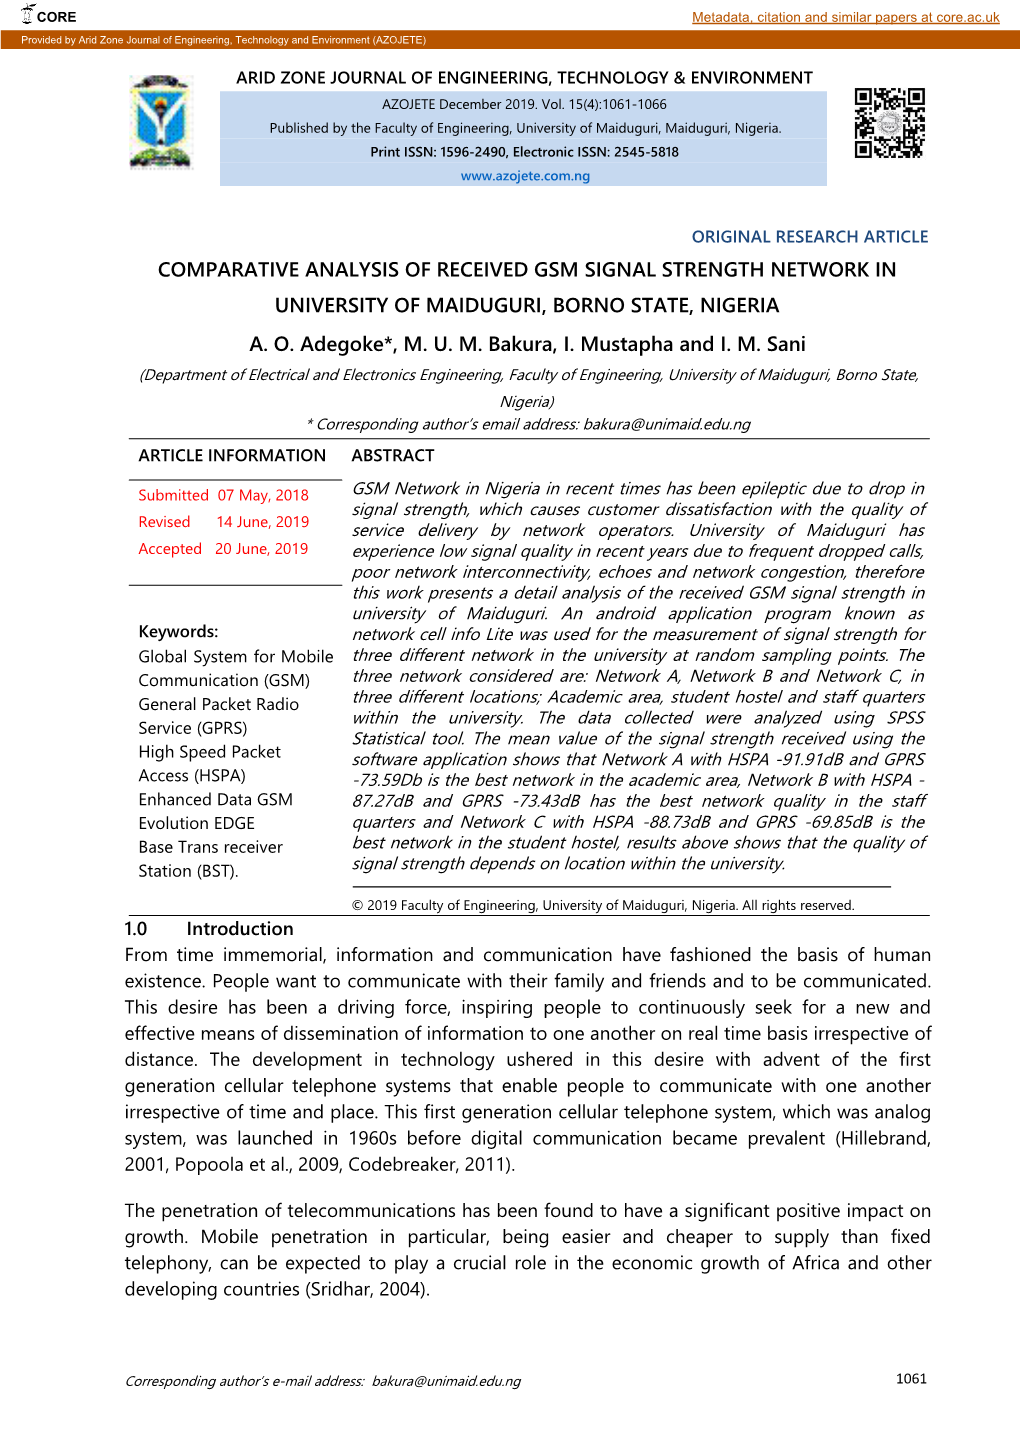 Comparative Analysis of Received Gsm Signal Strength Network in University of Maiduguri, Borno State, Nigeria A